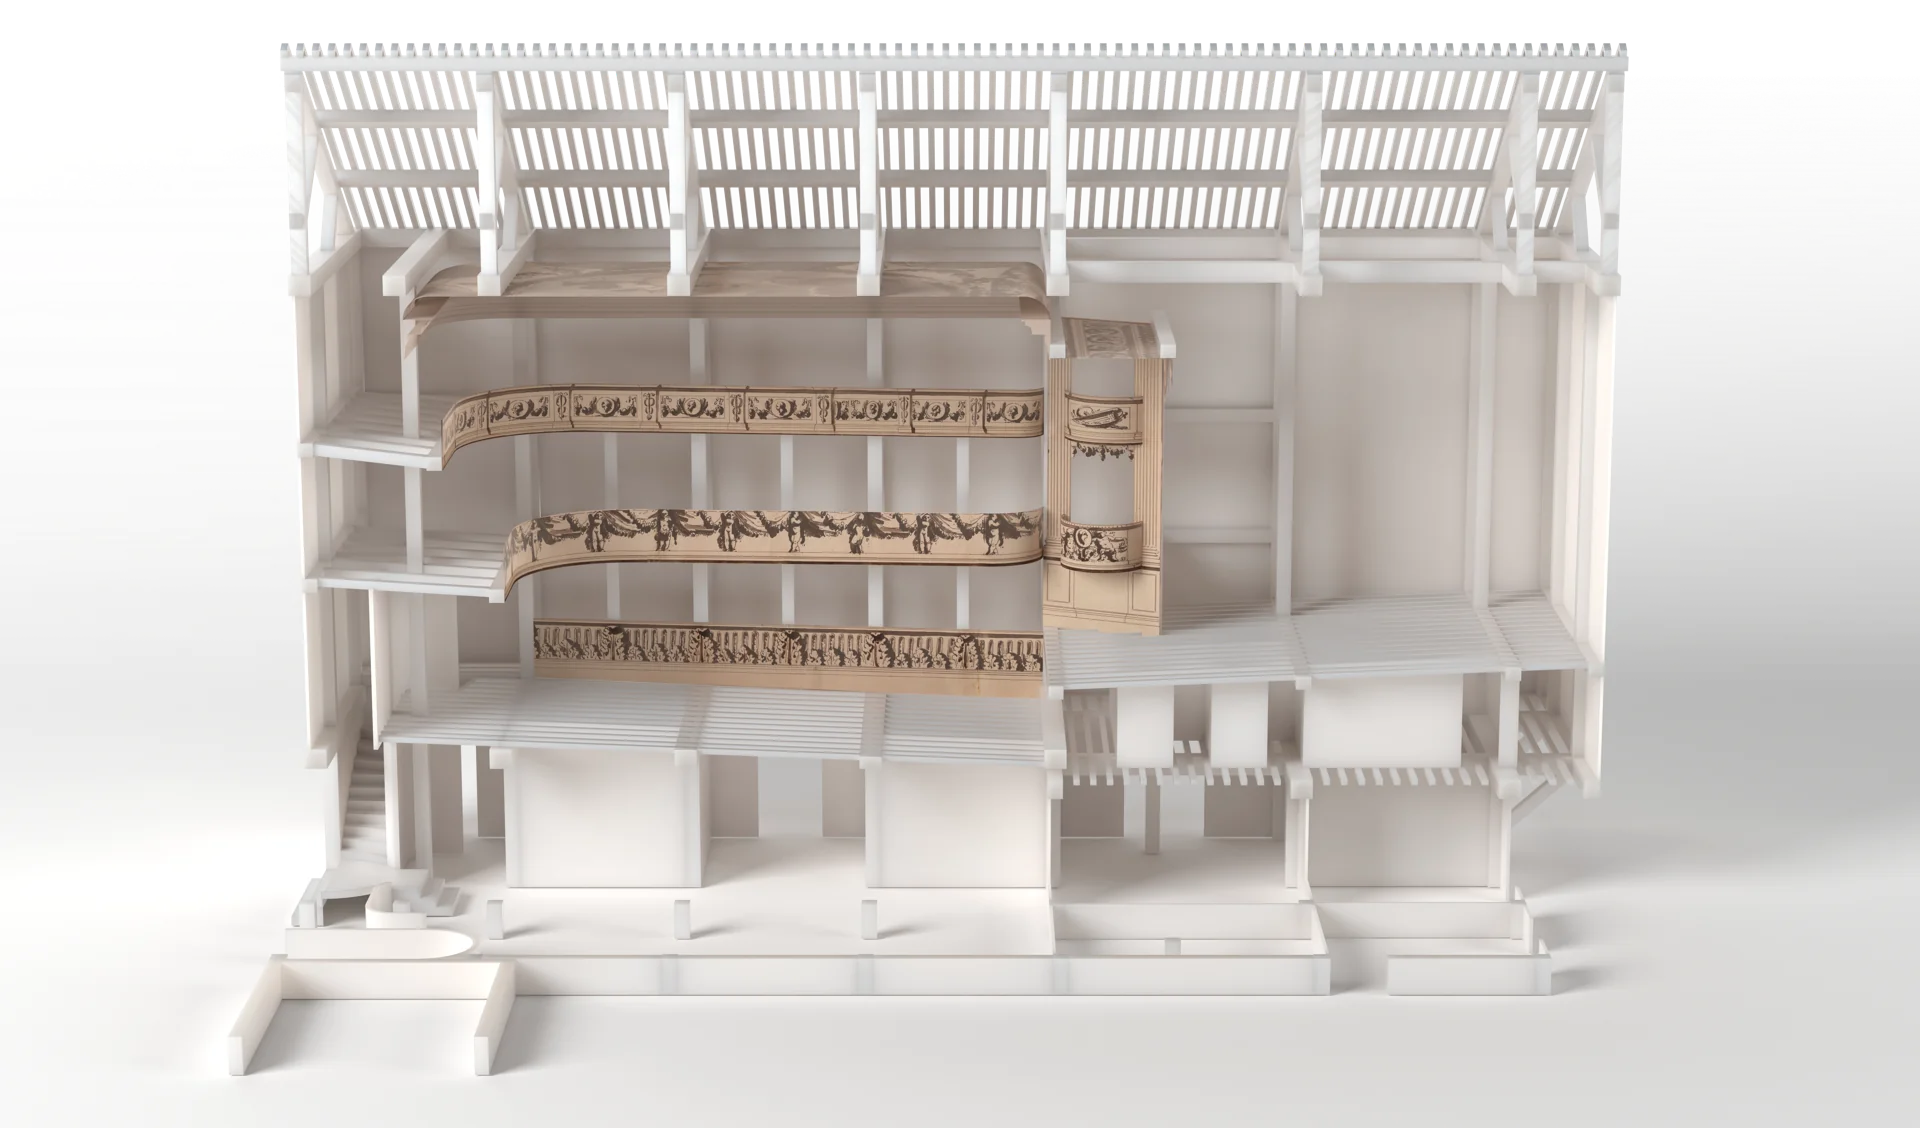 Longitudinal cross-section of a theatre model